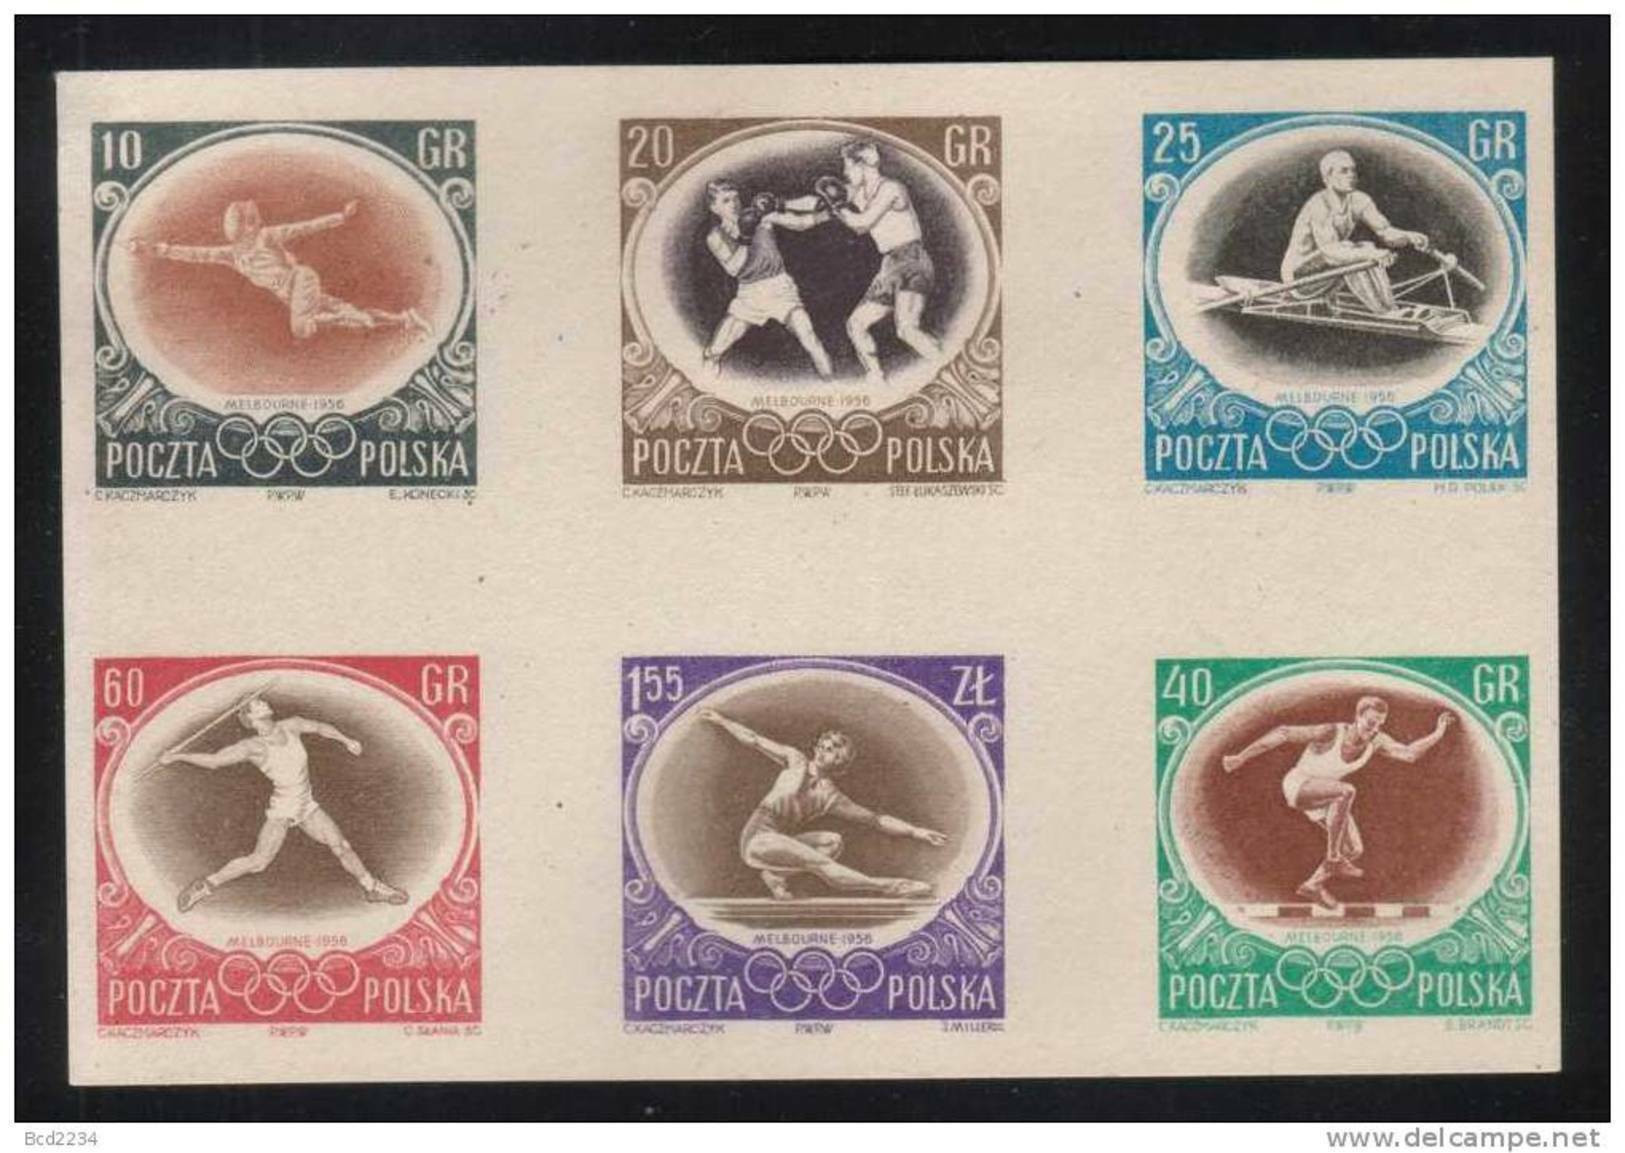 POLAND 1956 RARE SLANIA AUSTRALIA OLYMPICS COLOUR PROOF (NO GUM) SPORTS BOXING ROWING FENCING JAVELIN HURDLES - Sommer 1956: Melbourne